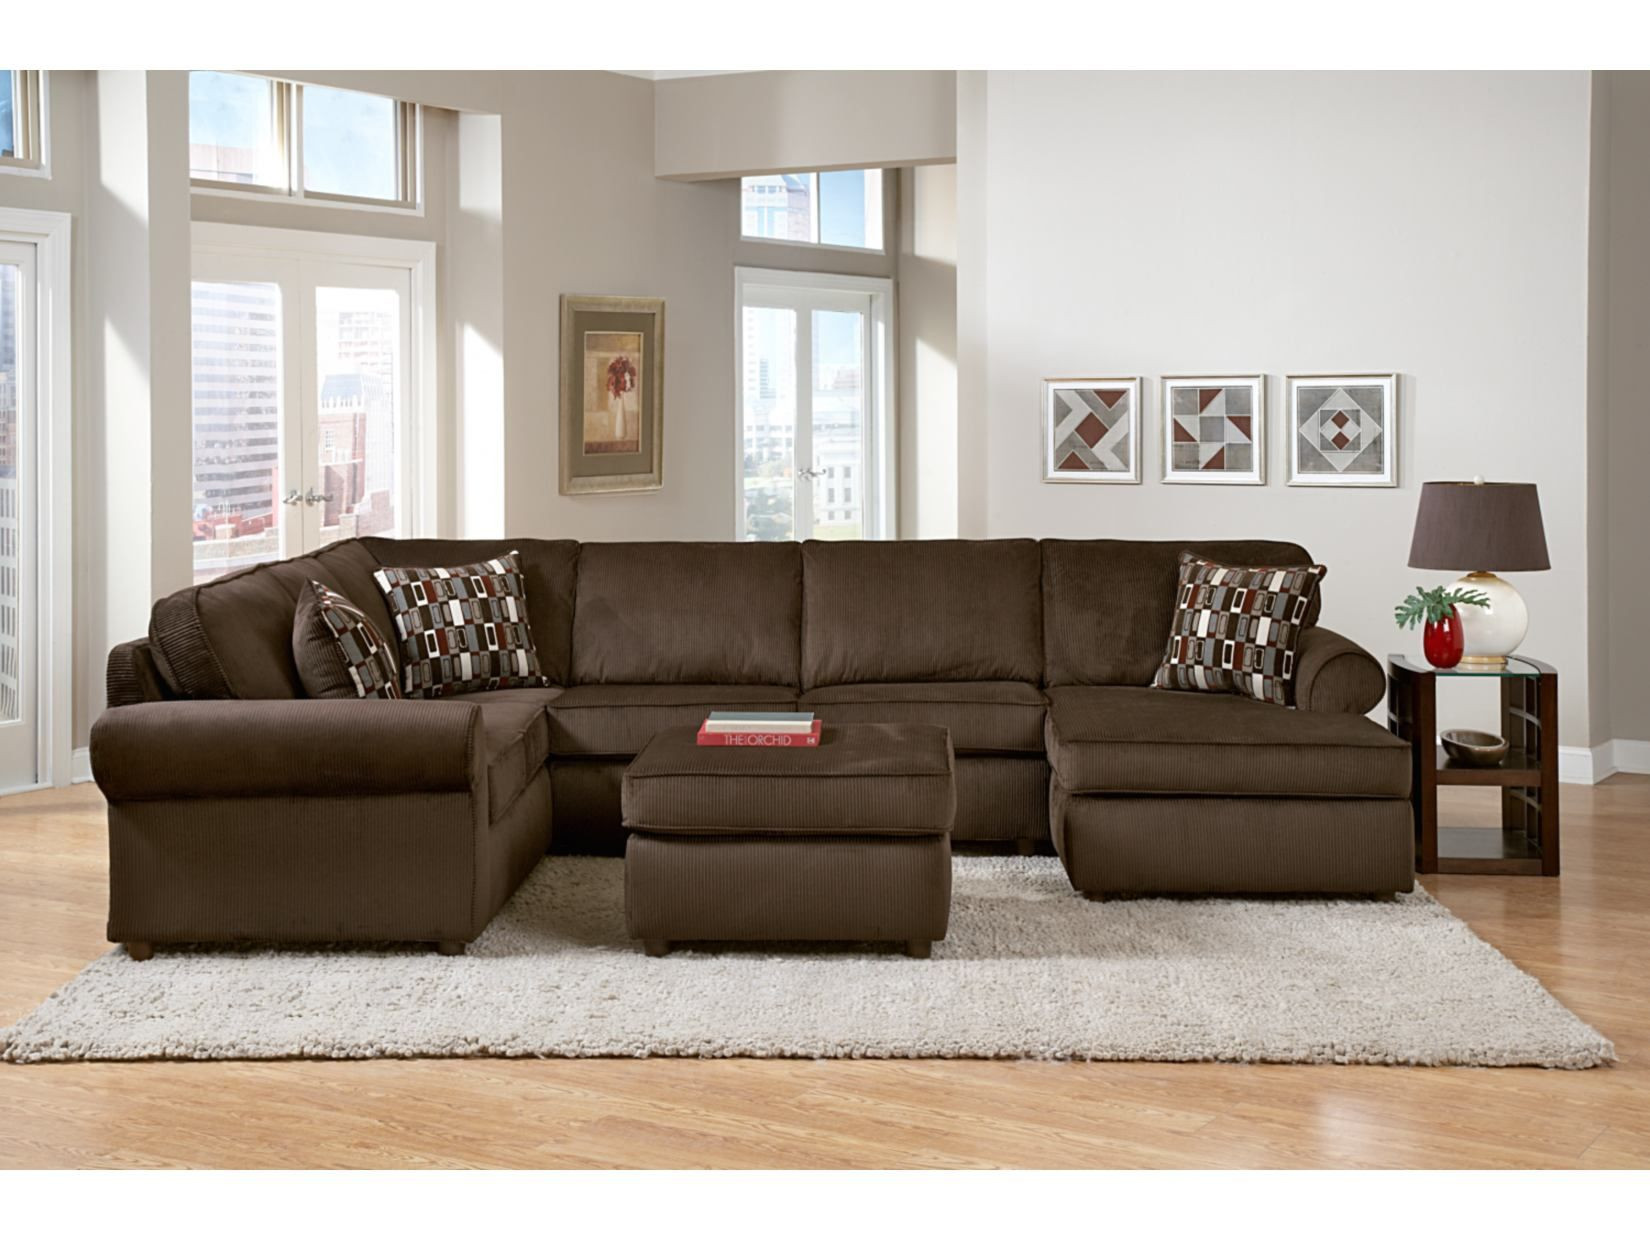 value city living room sets